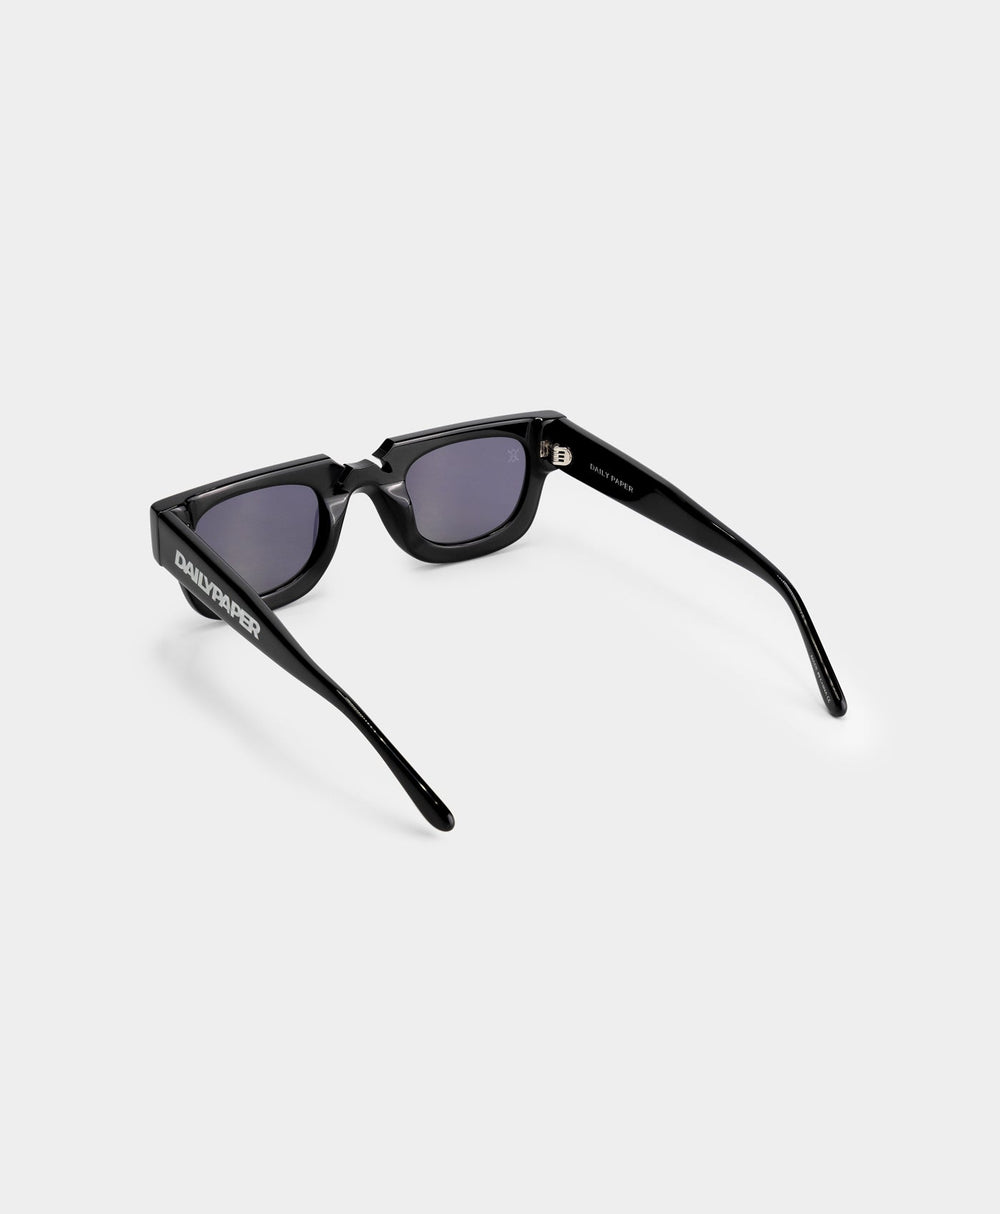 DP - Black Patti Sunglasses - Packshot - Rear